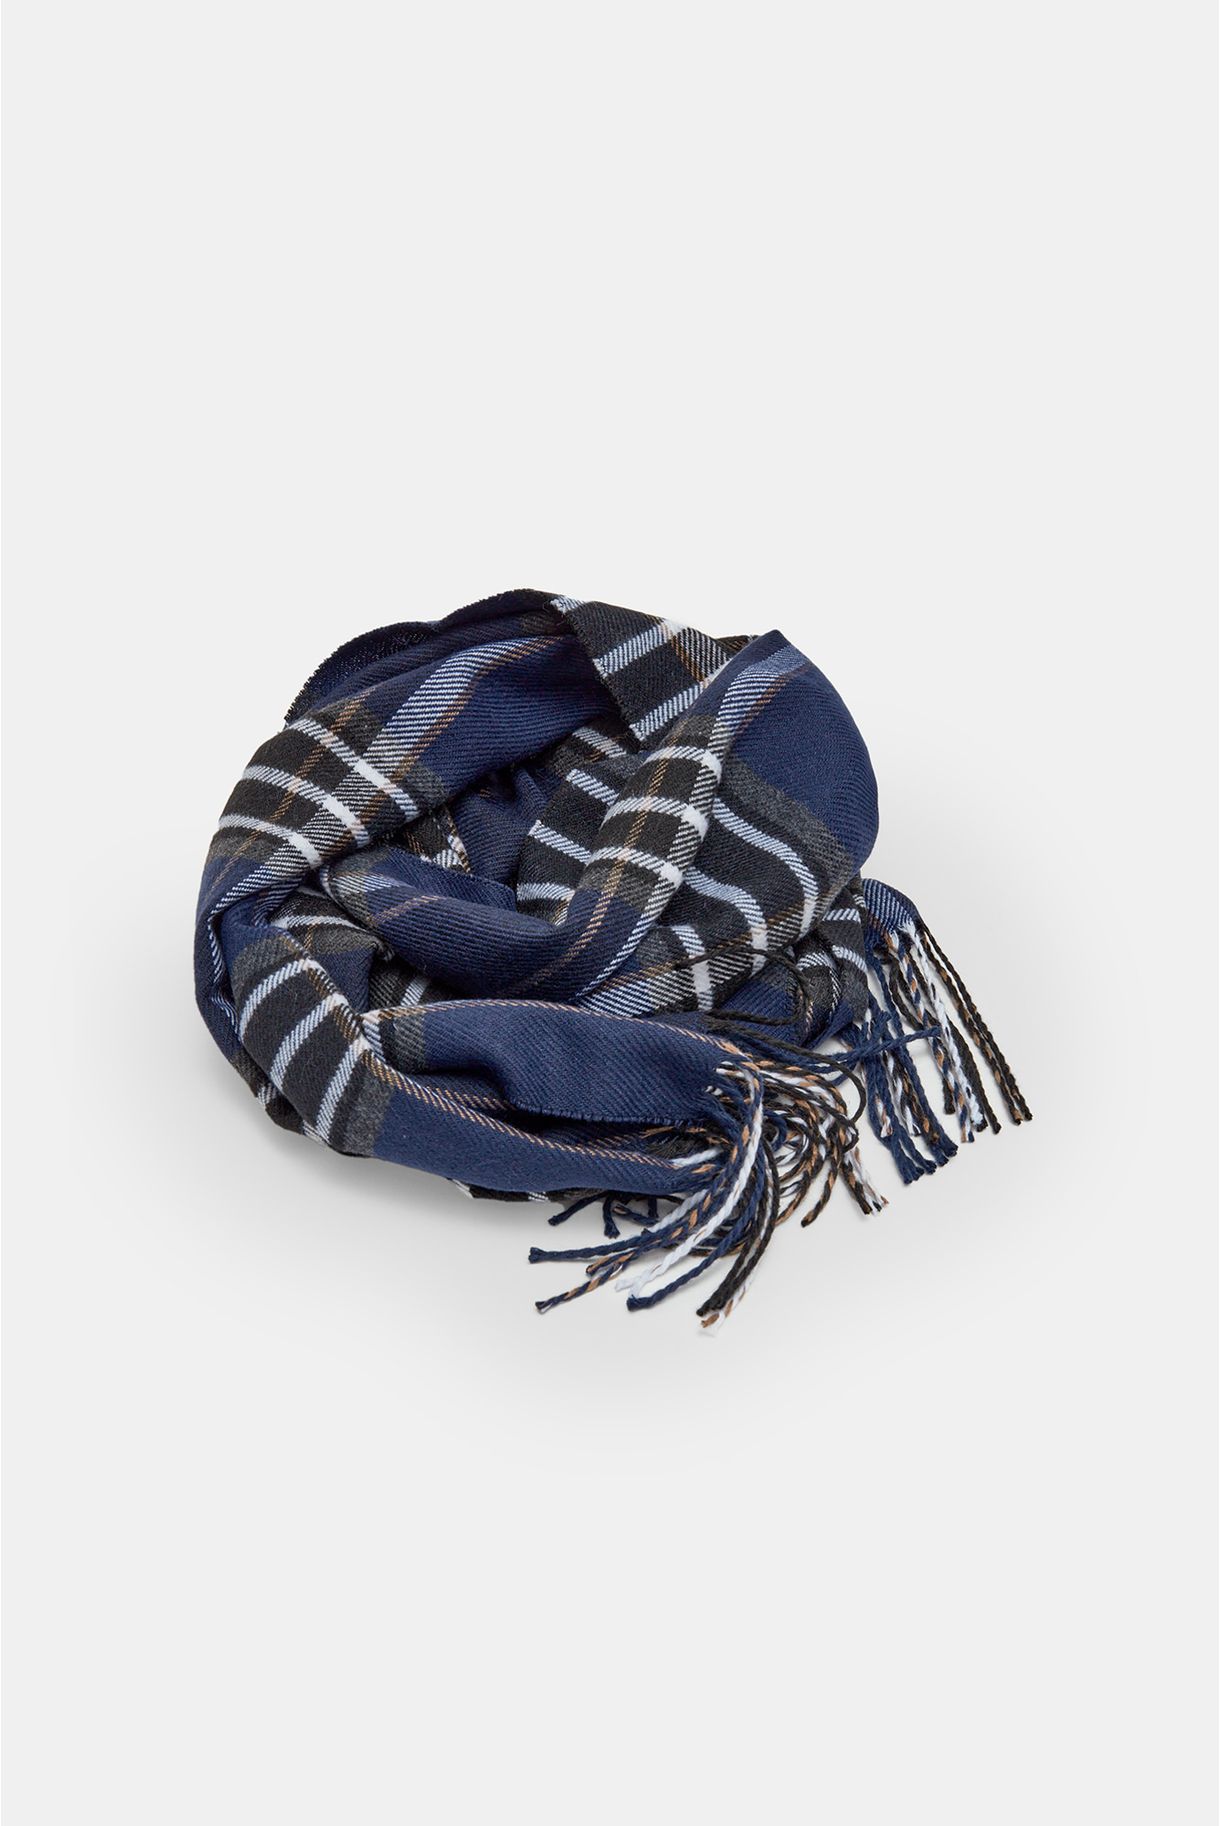 Men's scarf in dark blue